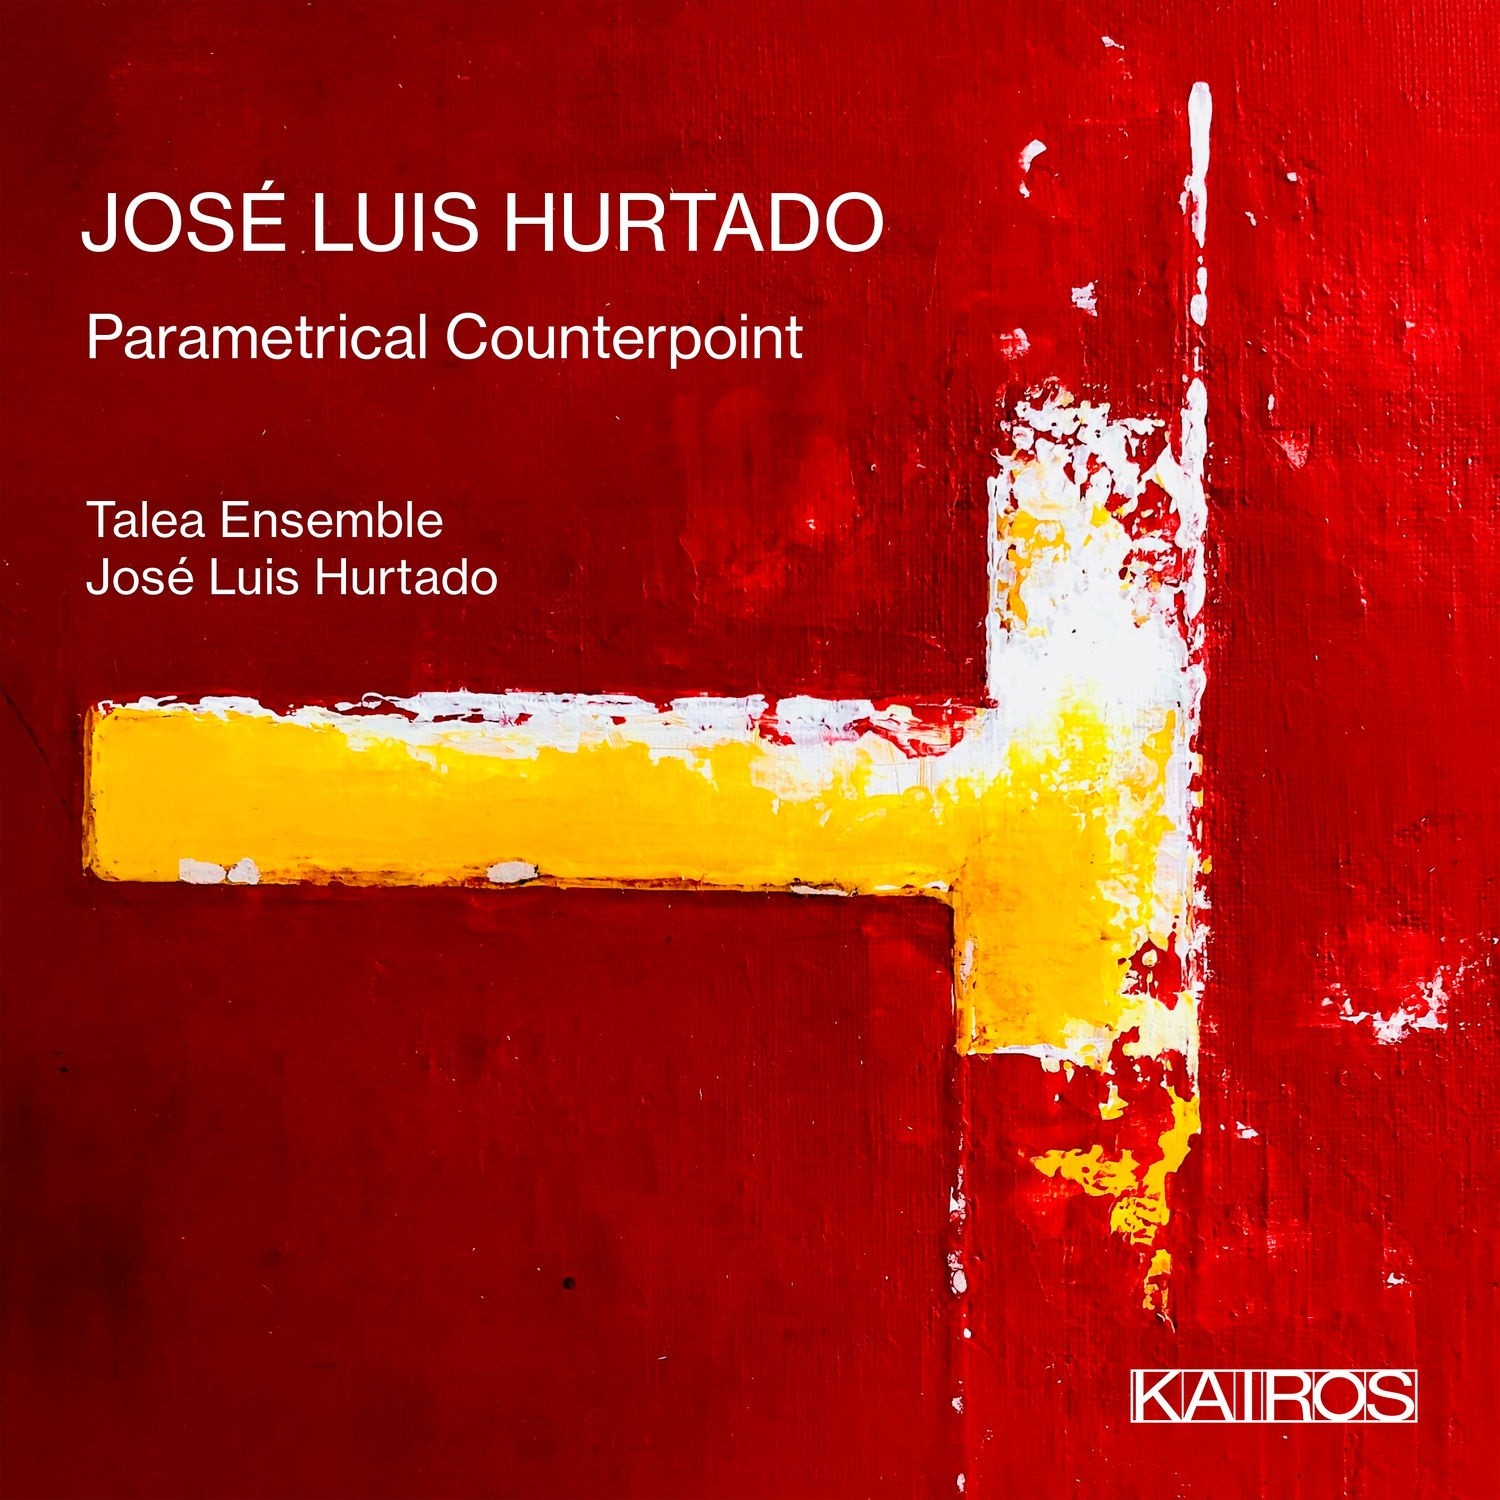 Talea Ensemble, José Luis Hurtado - José Luis Hurtado: Parametrical Counterpoint (2021) [FLAC 24bit/48kHz] Download